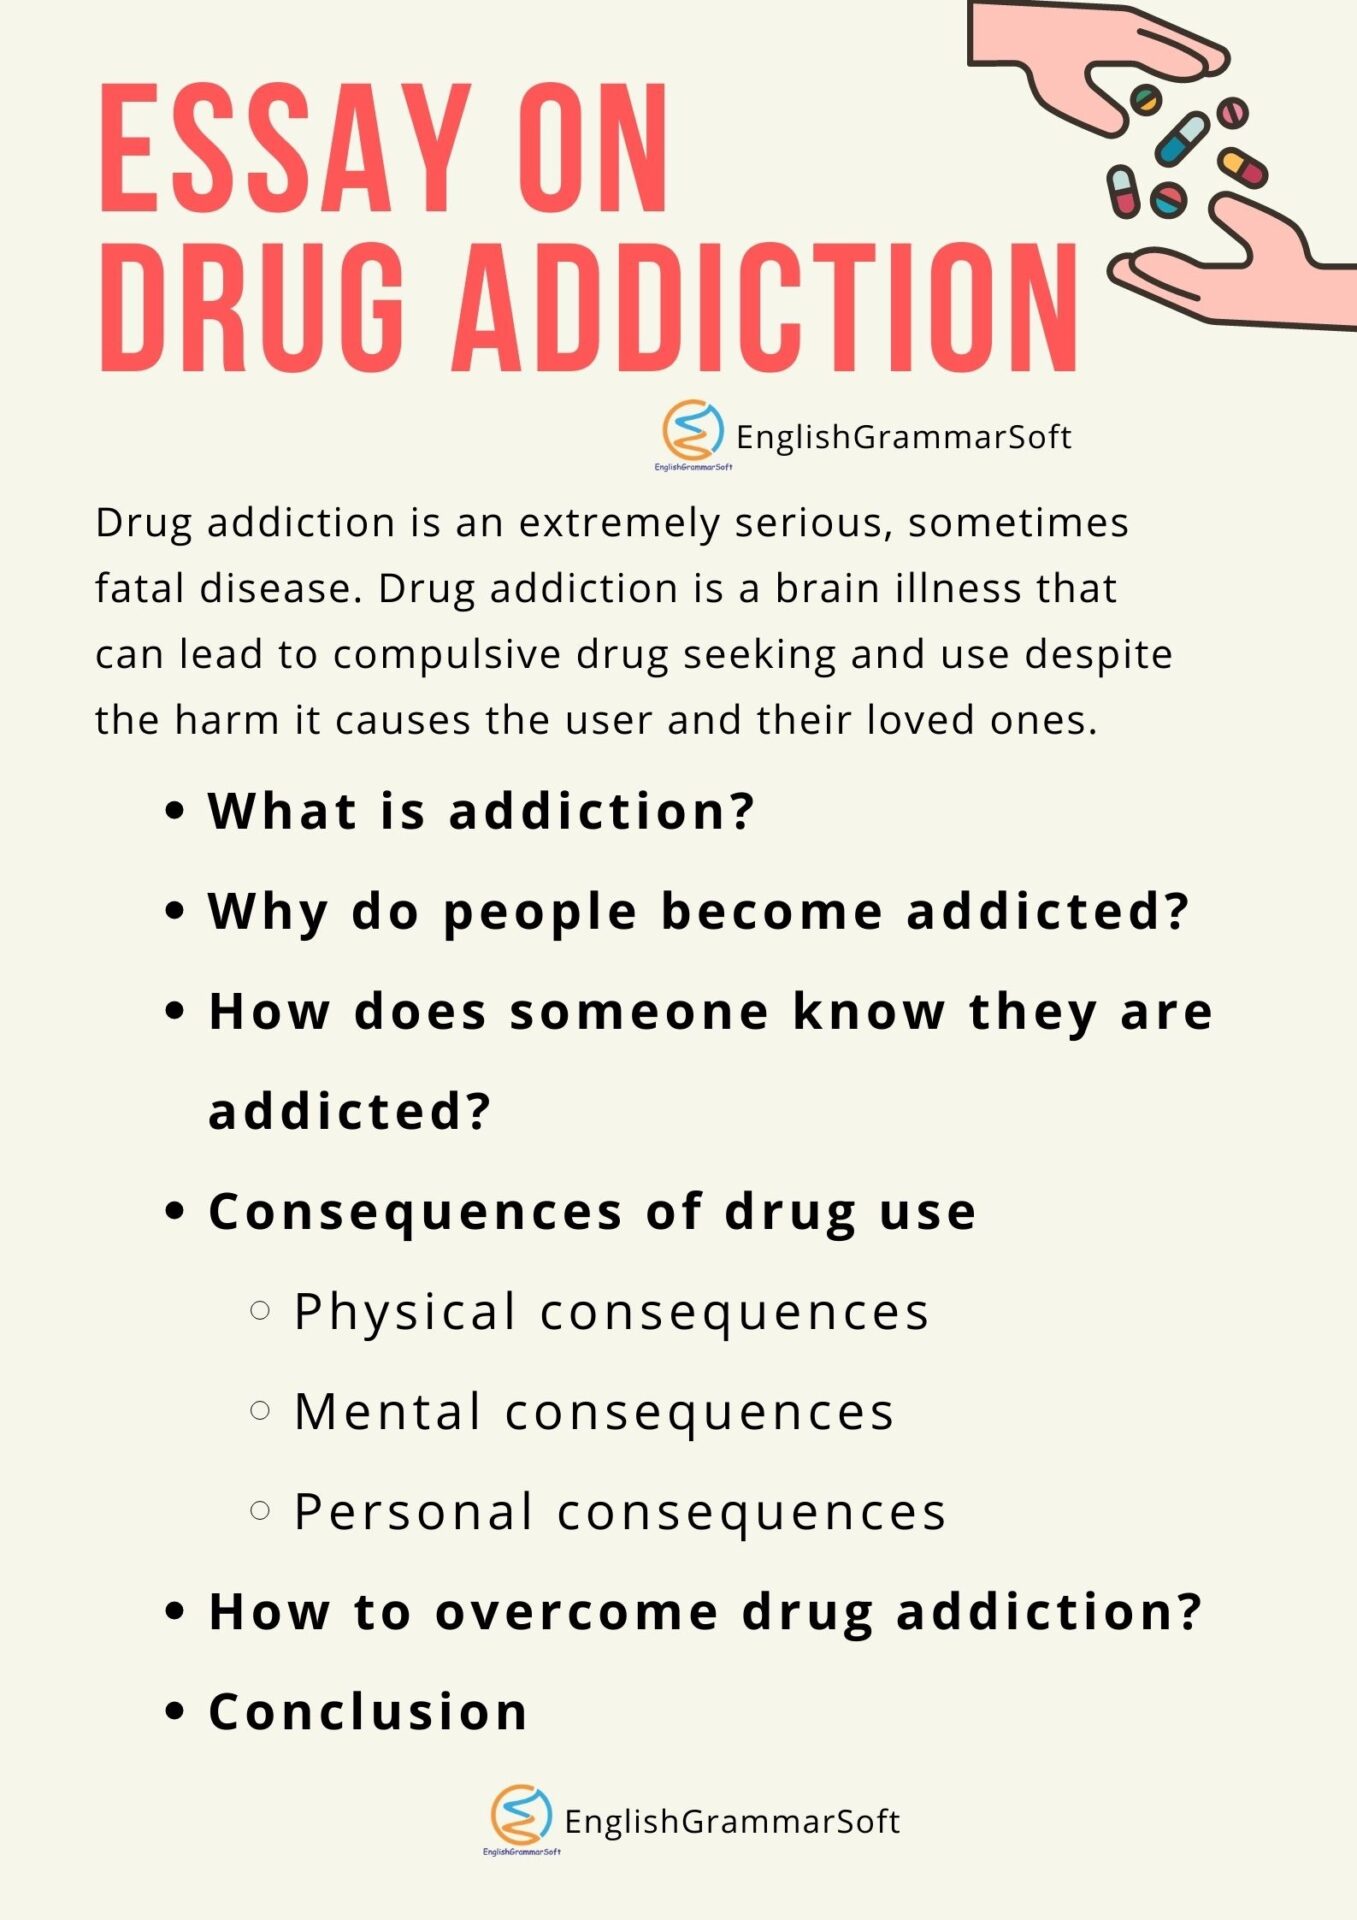 Essay on Drug Addiction